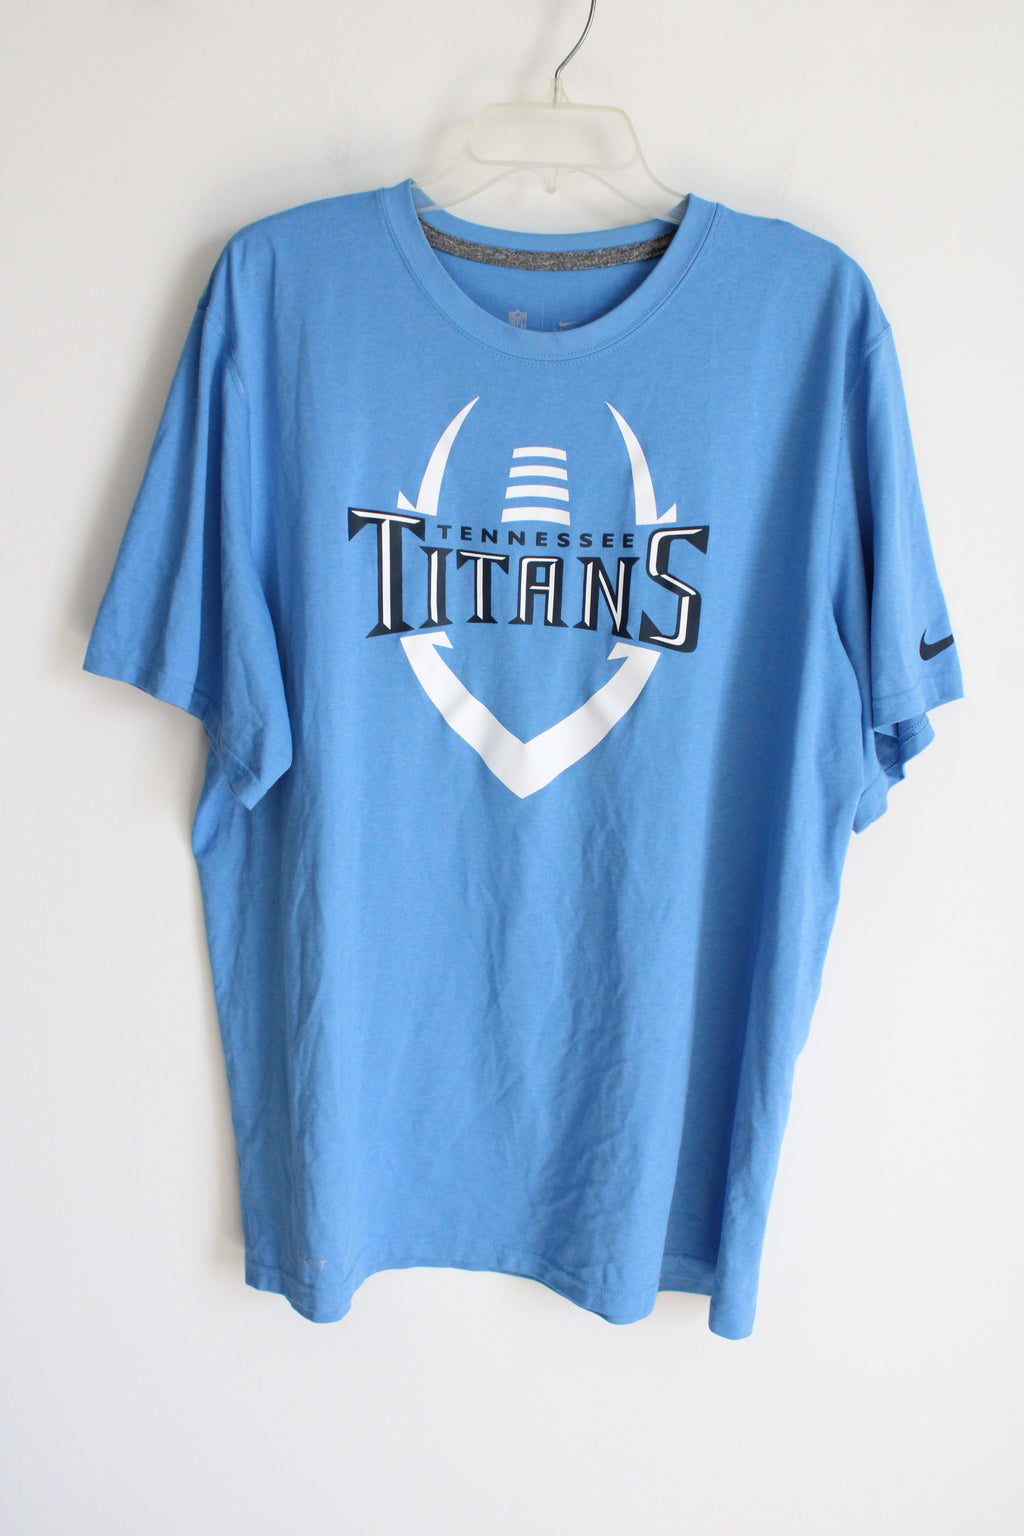 NFL Team Dry-Fit Tennessee Titans Blue Shirt | XL